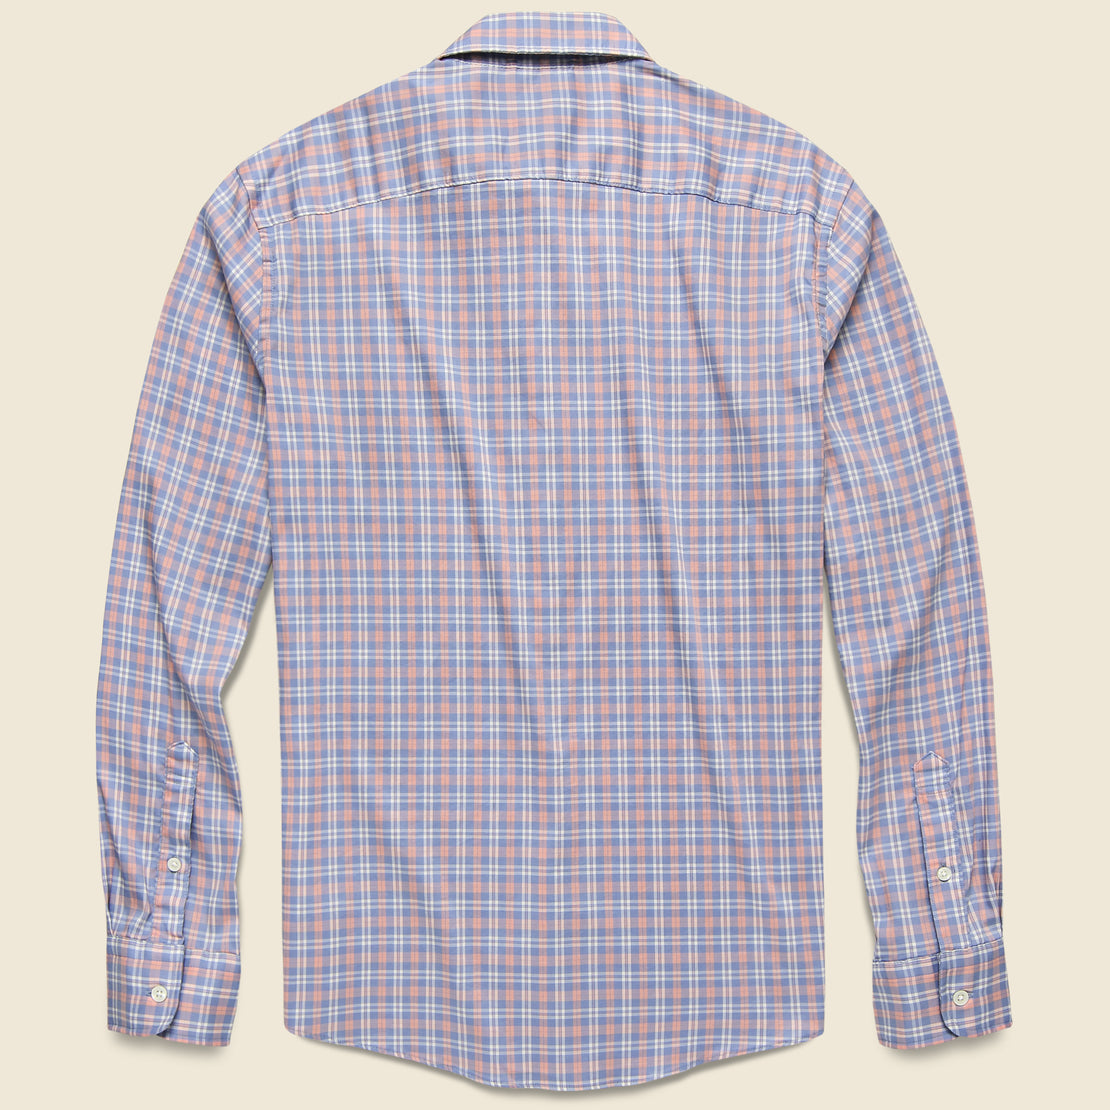 Movement Shirt - Redondo Plaid - Faherty - STAG Provisions - Tops - L/S Woven - Plaid